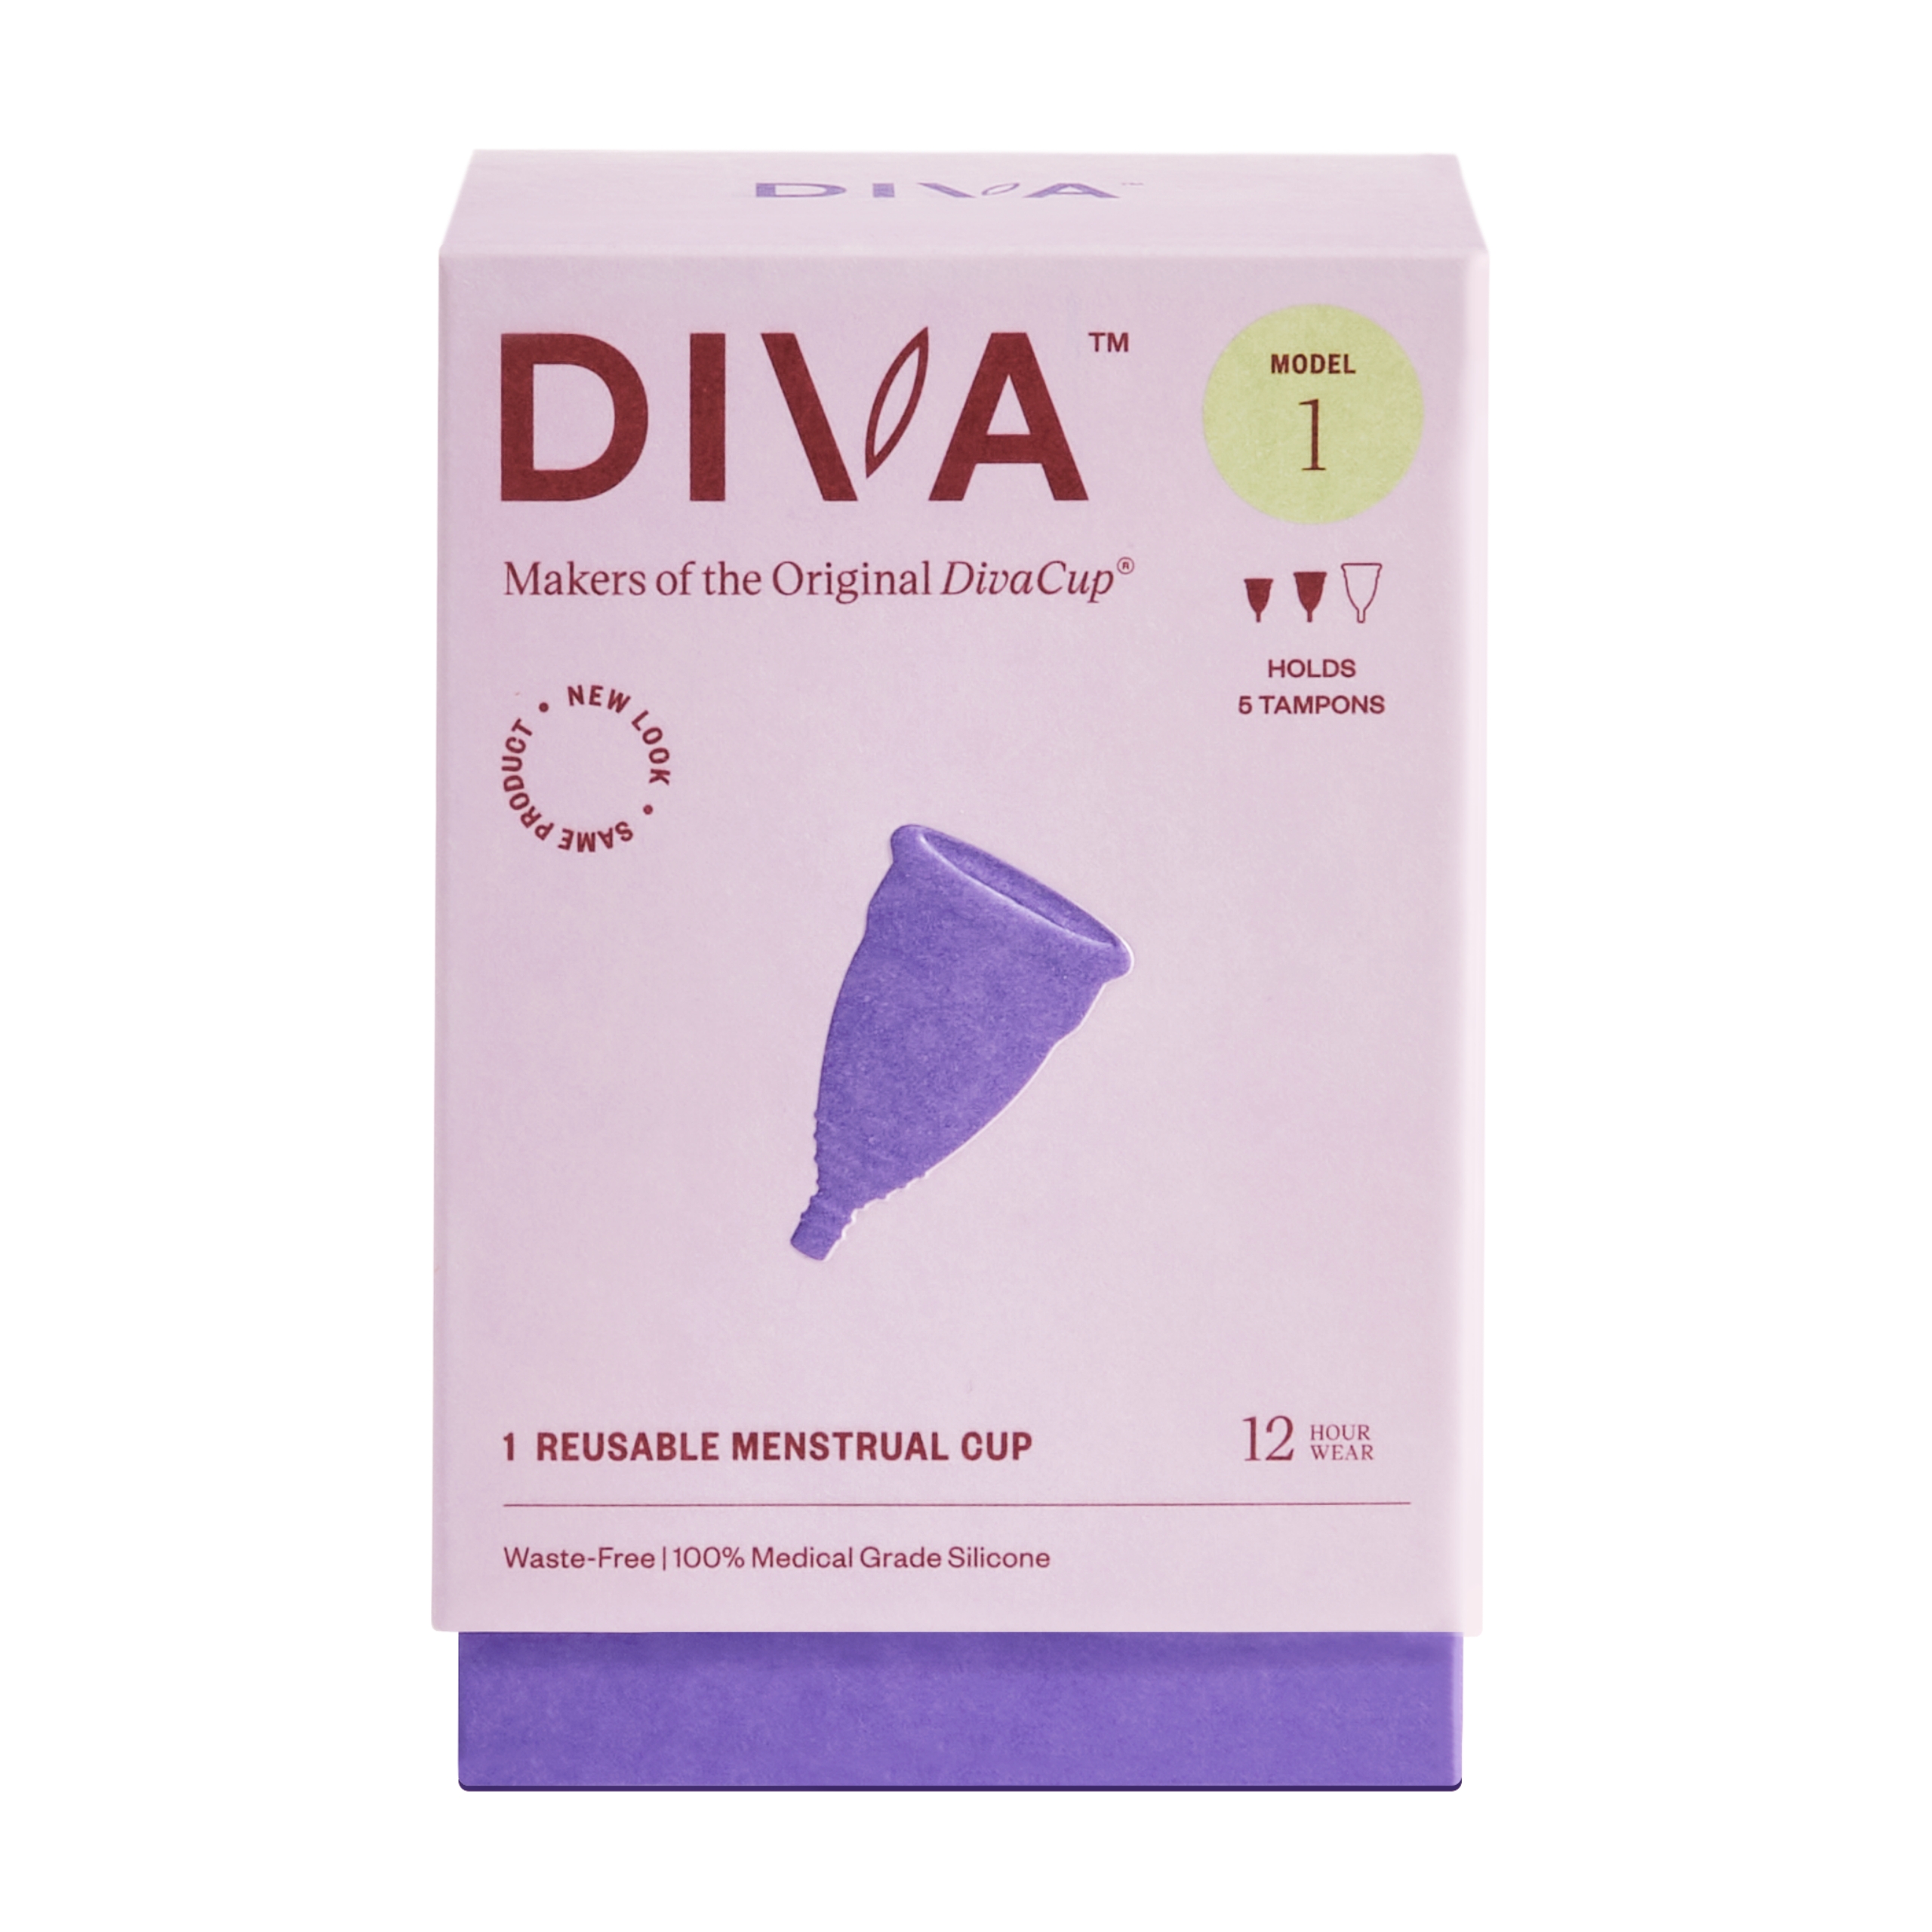 DivaCup Model 1 Menstrual Cup - image 1 of 7